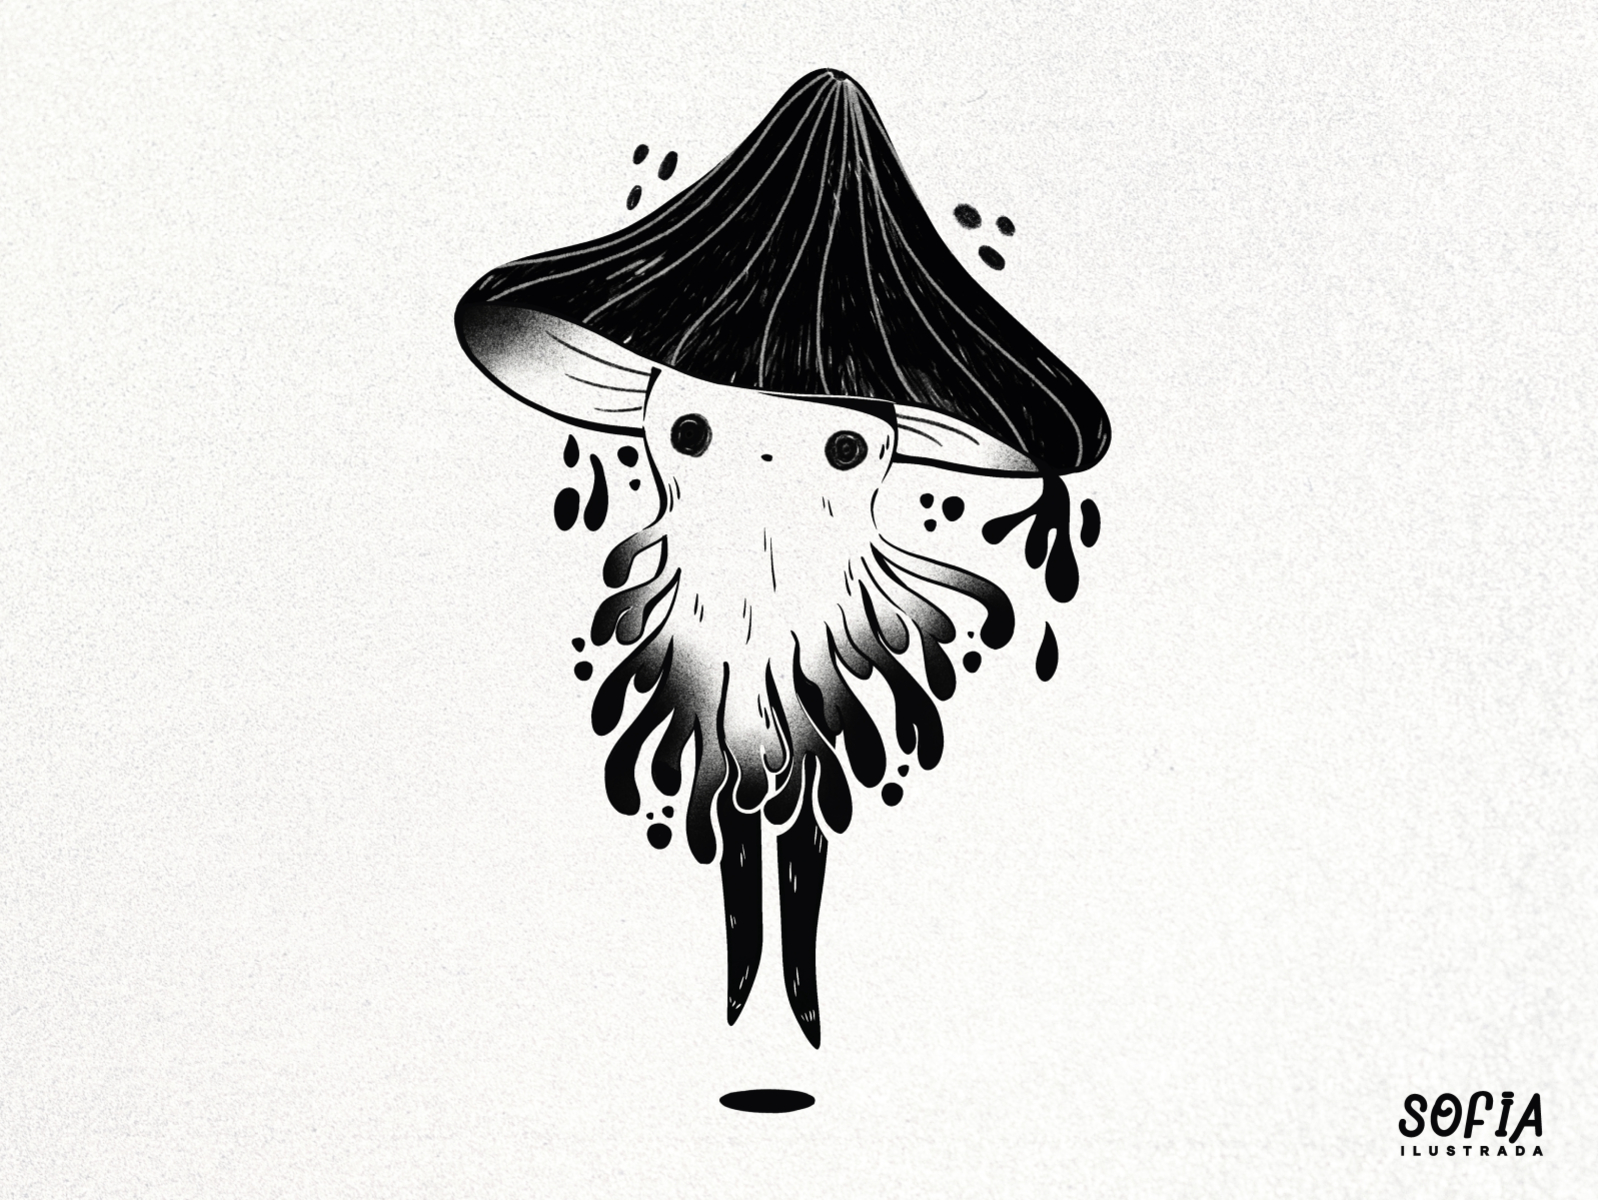 Ghost mushroom by Sofía ilustrada on Dribbble